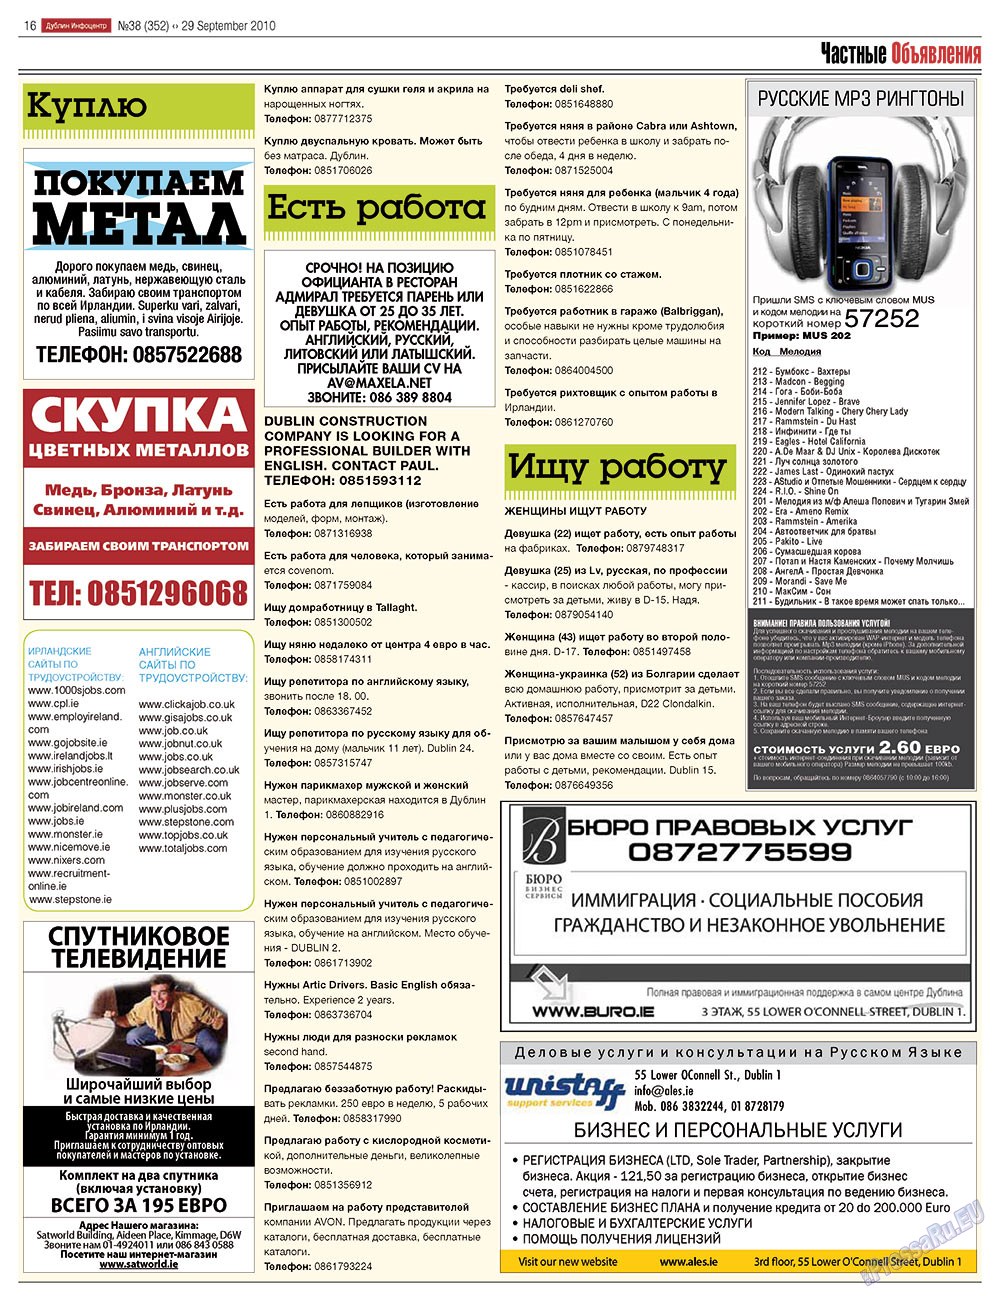 Дублин инфоцентр, газета. 2010 №38 стр.16